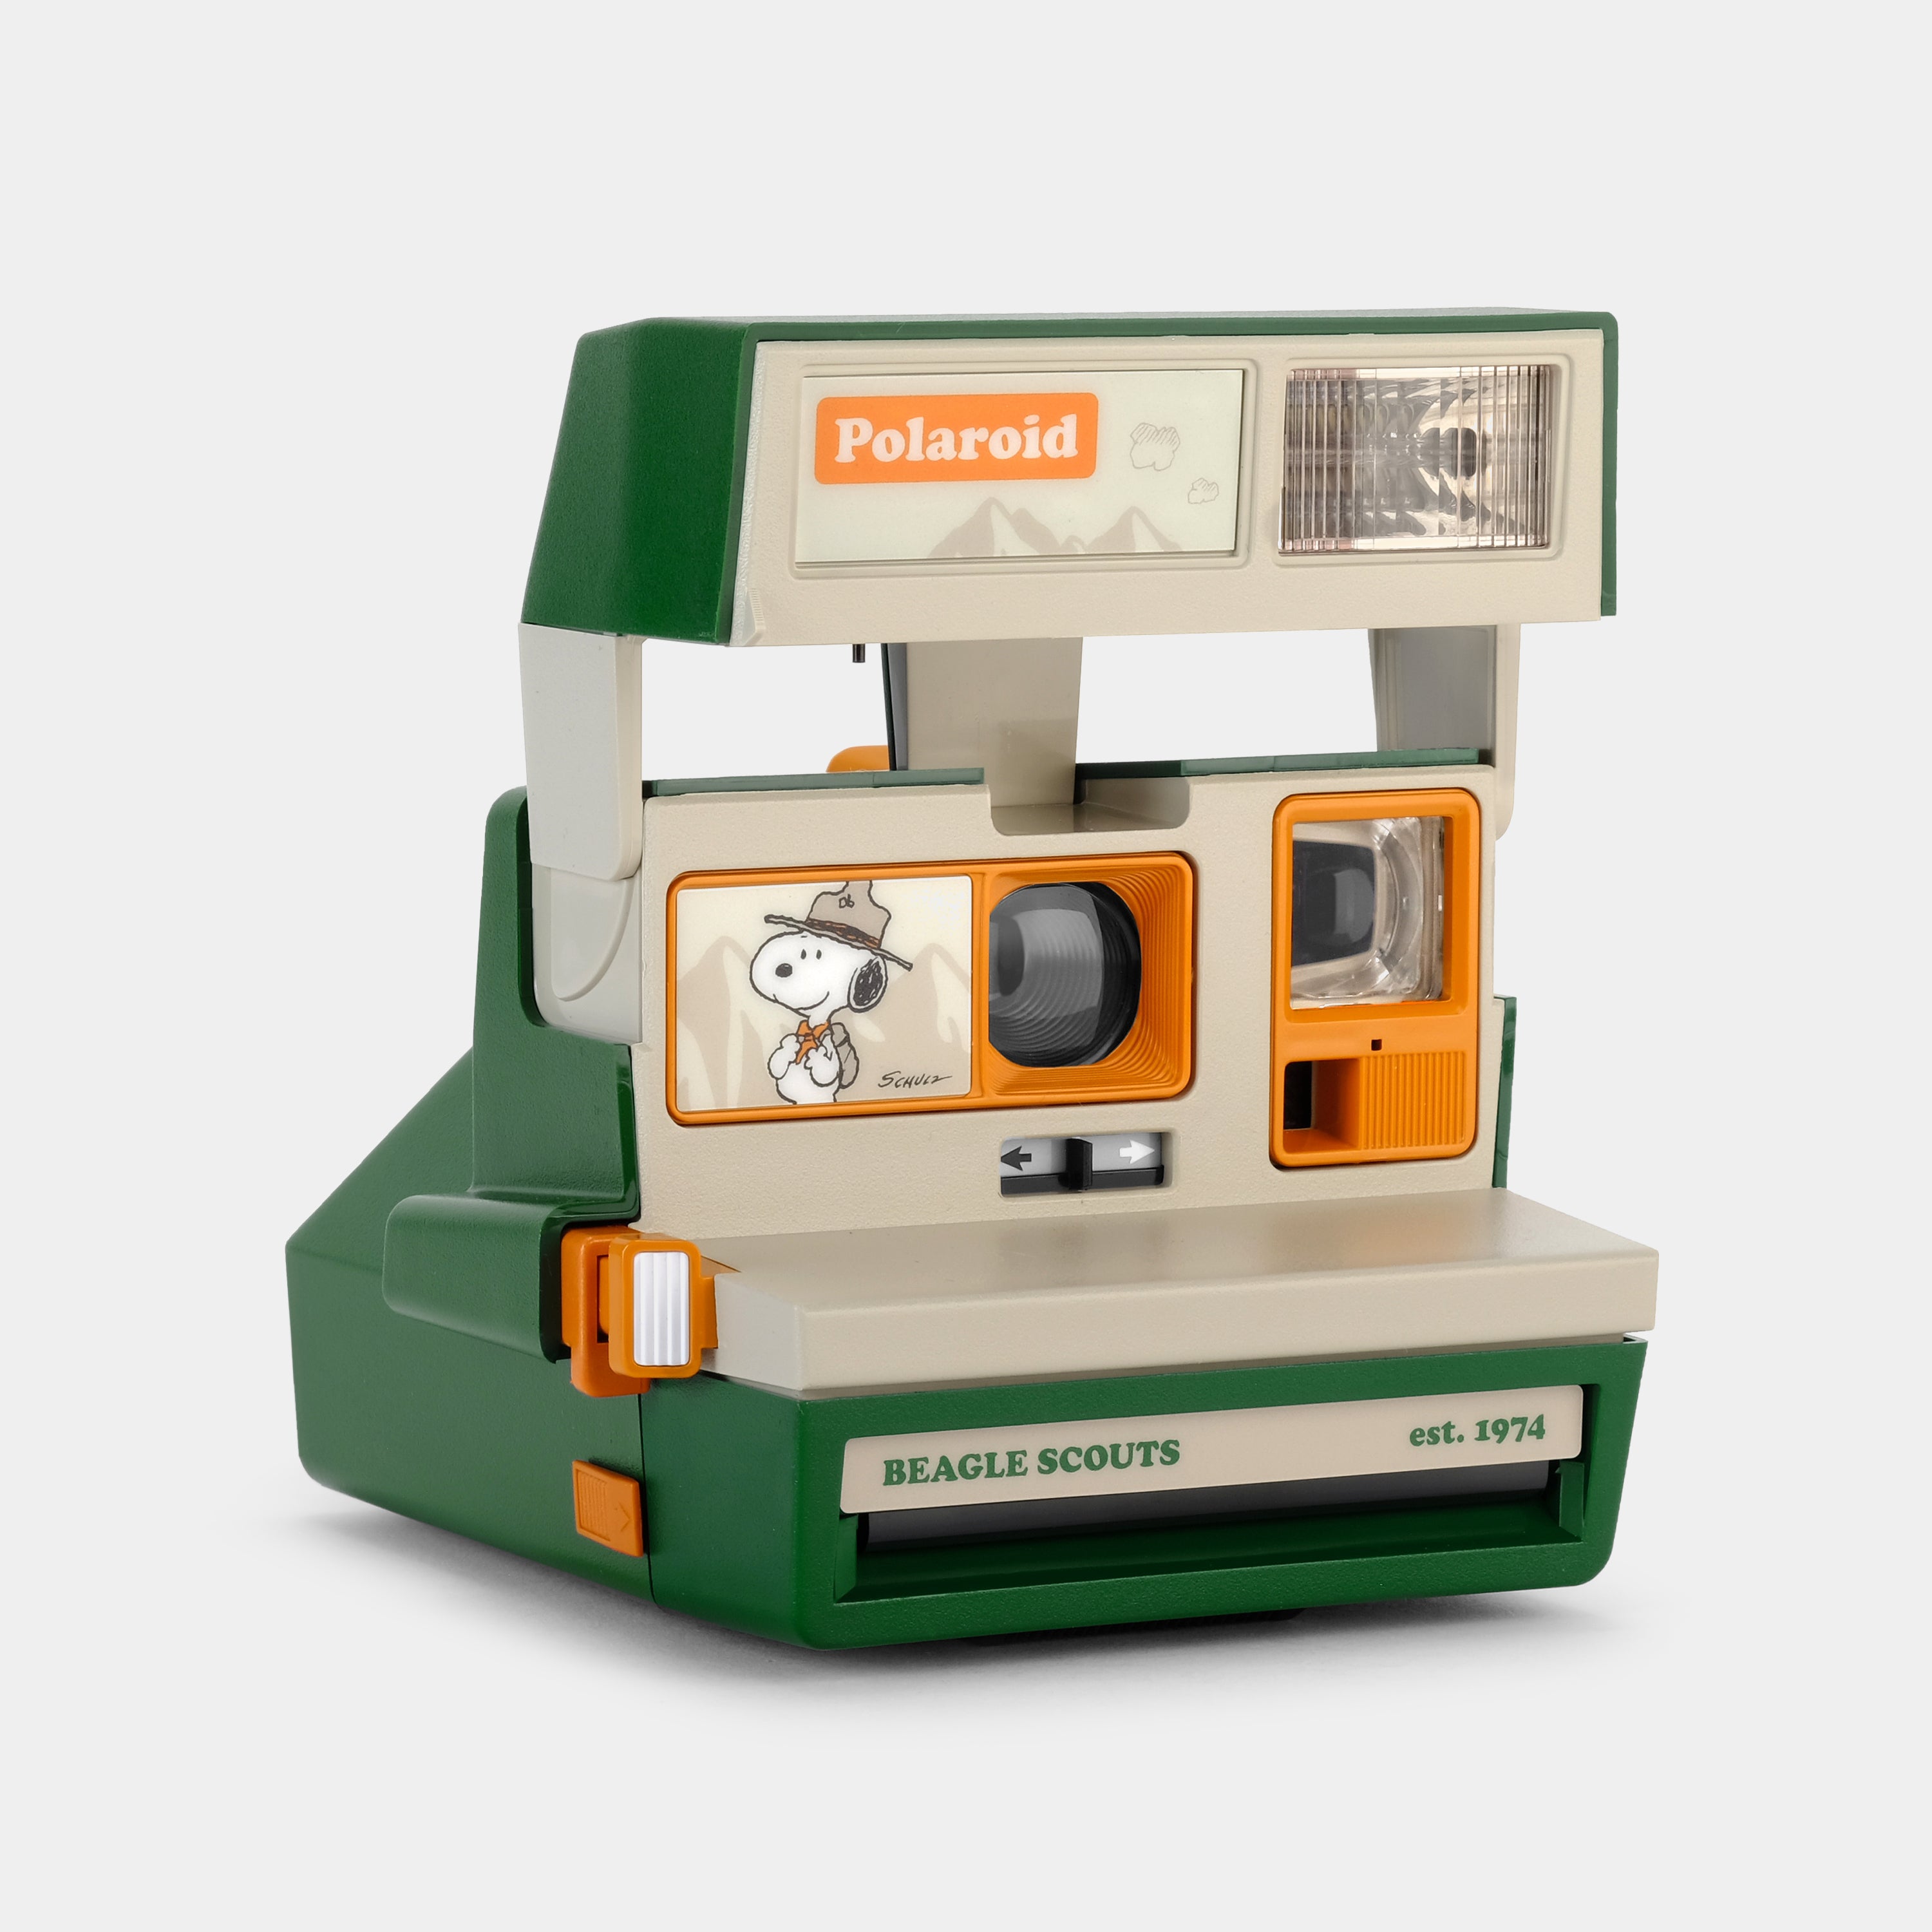 Polaroid 600 Peanuts Beagle Scouts Instant Film Camera